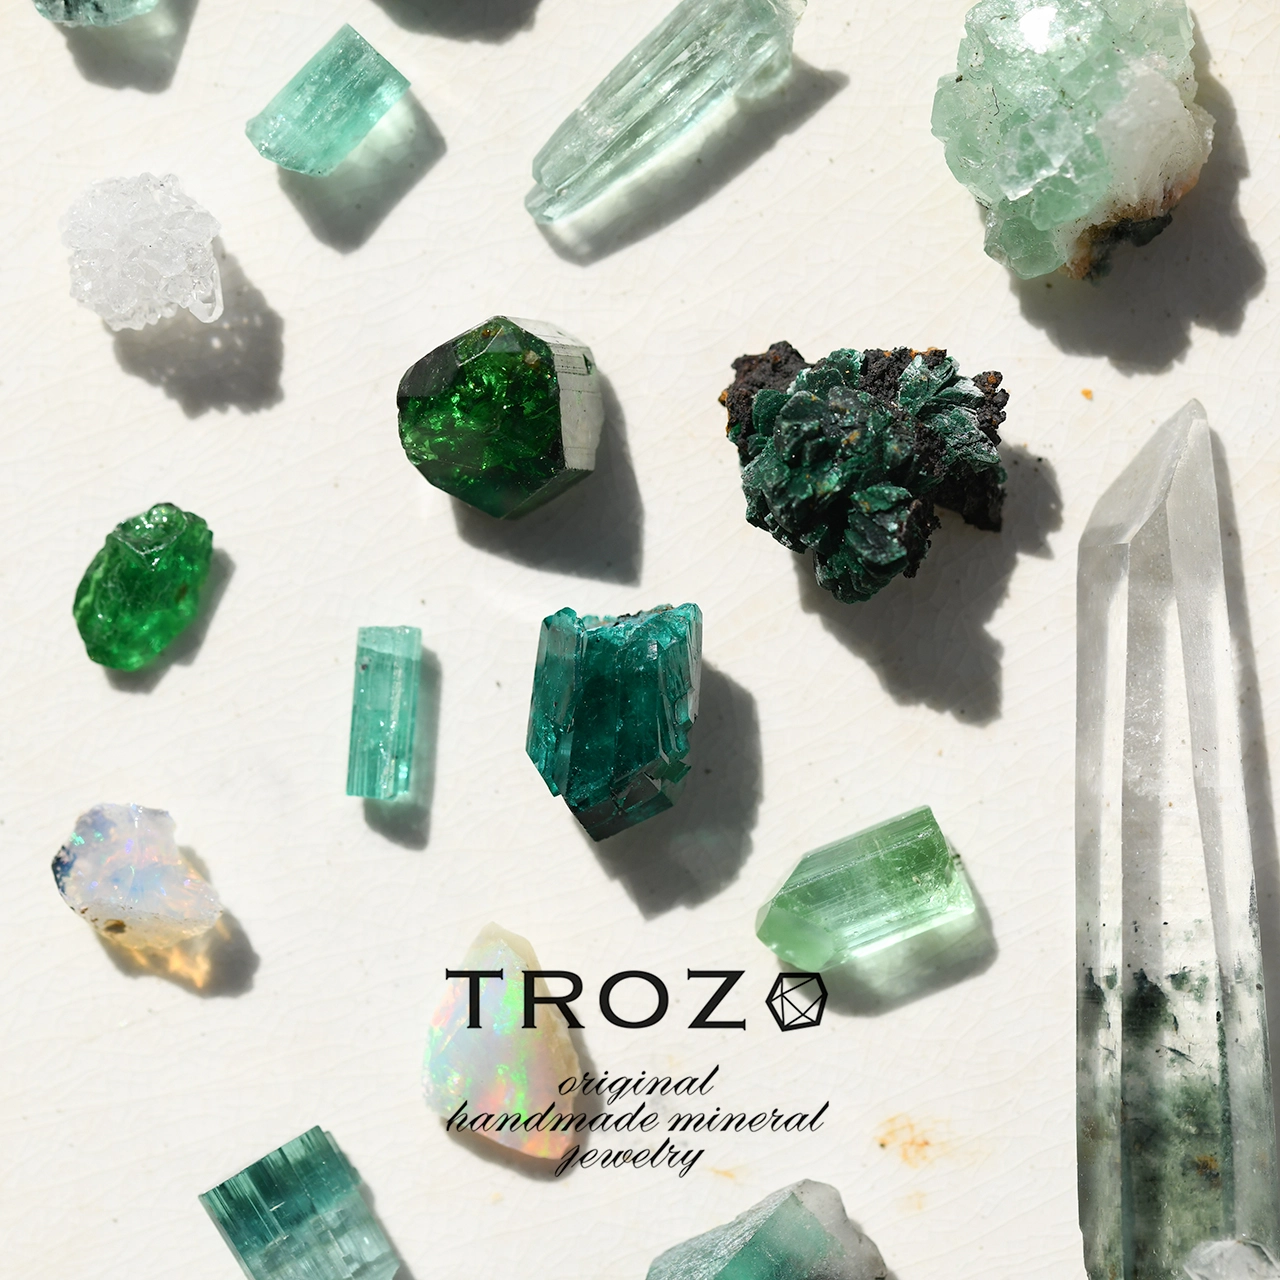 Twilight Collection | TROZO 鉱物原石の天然石アクセサリーブランド